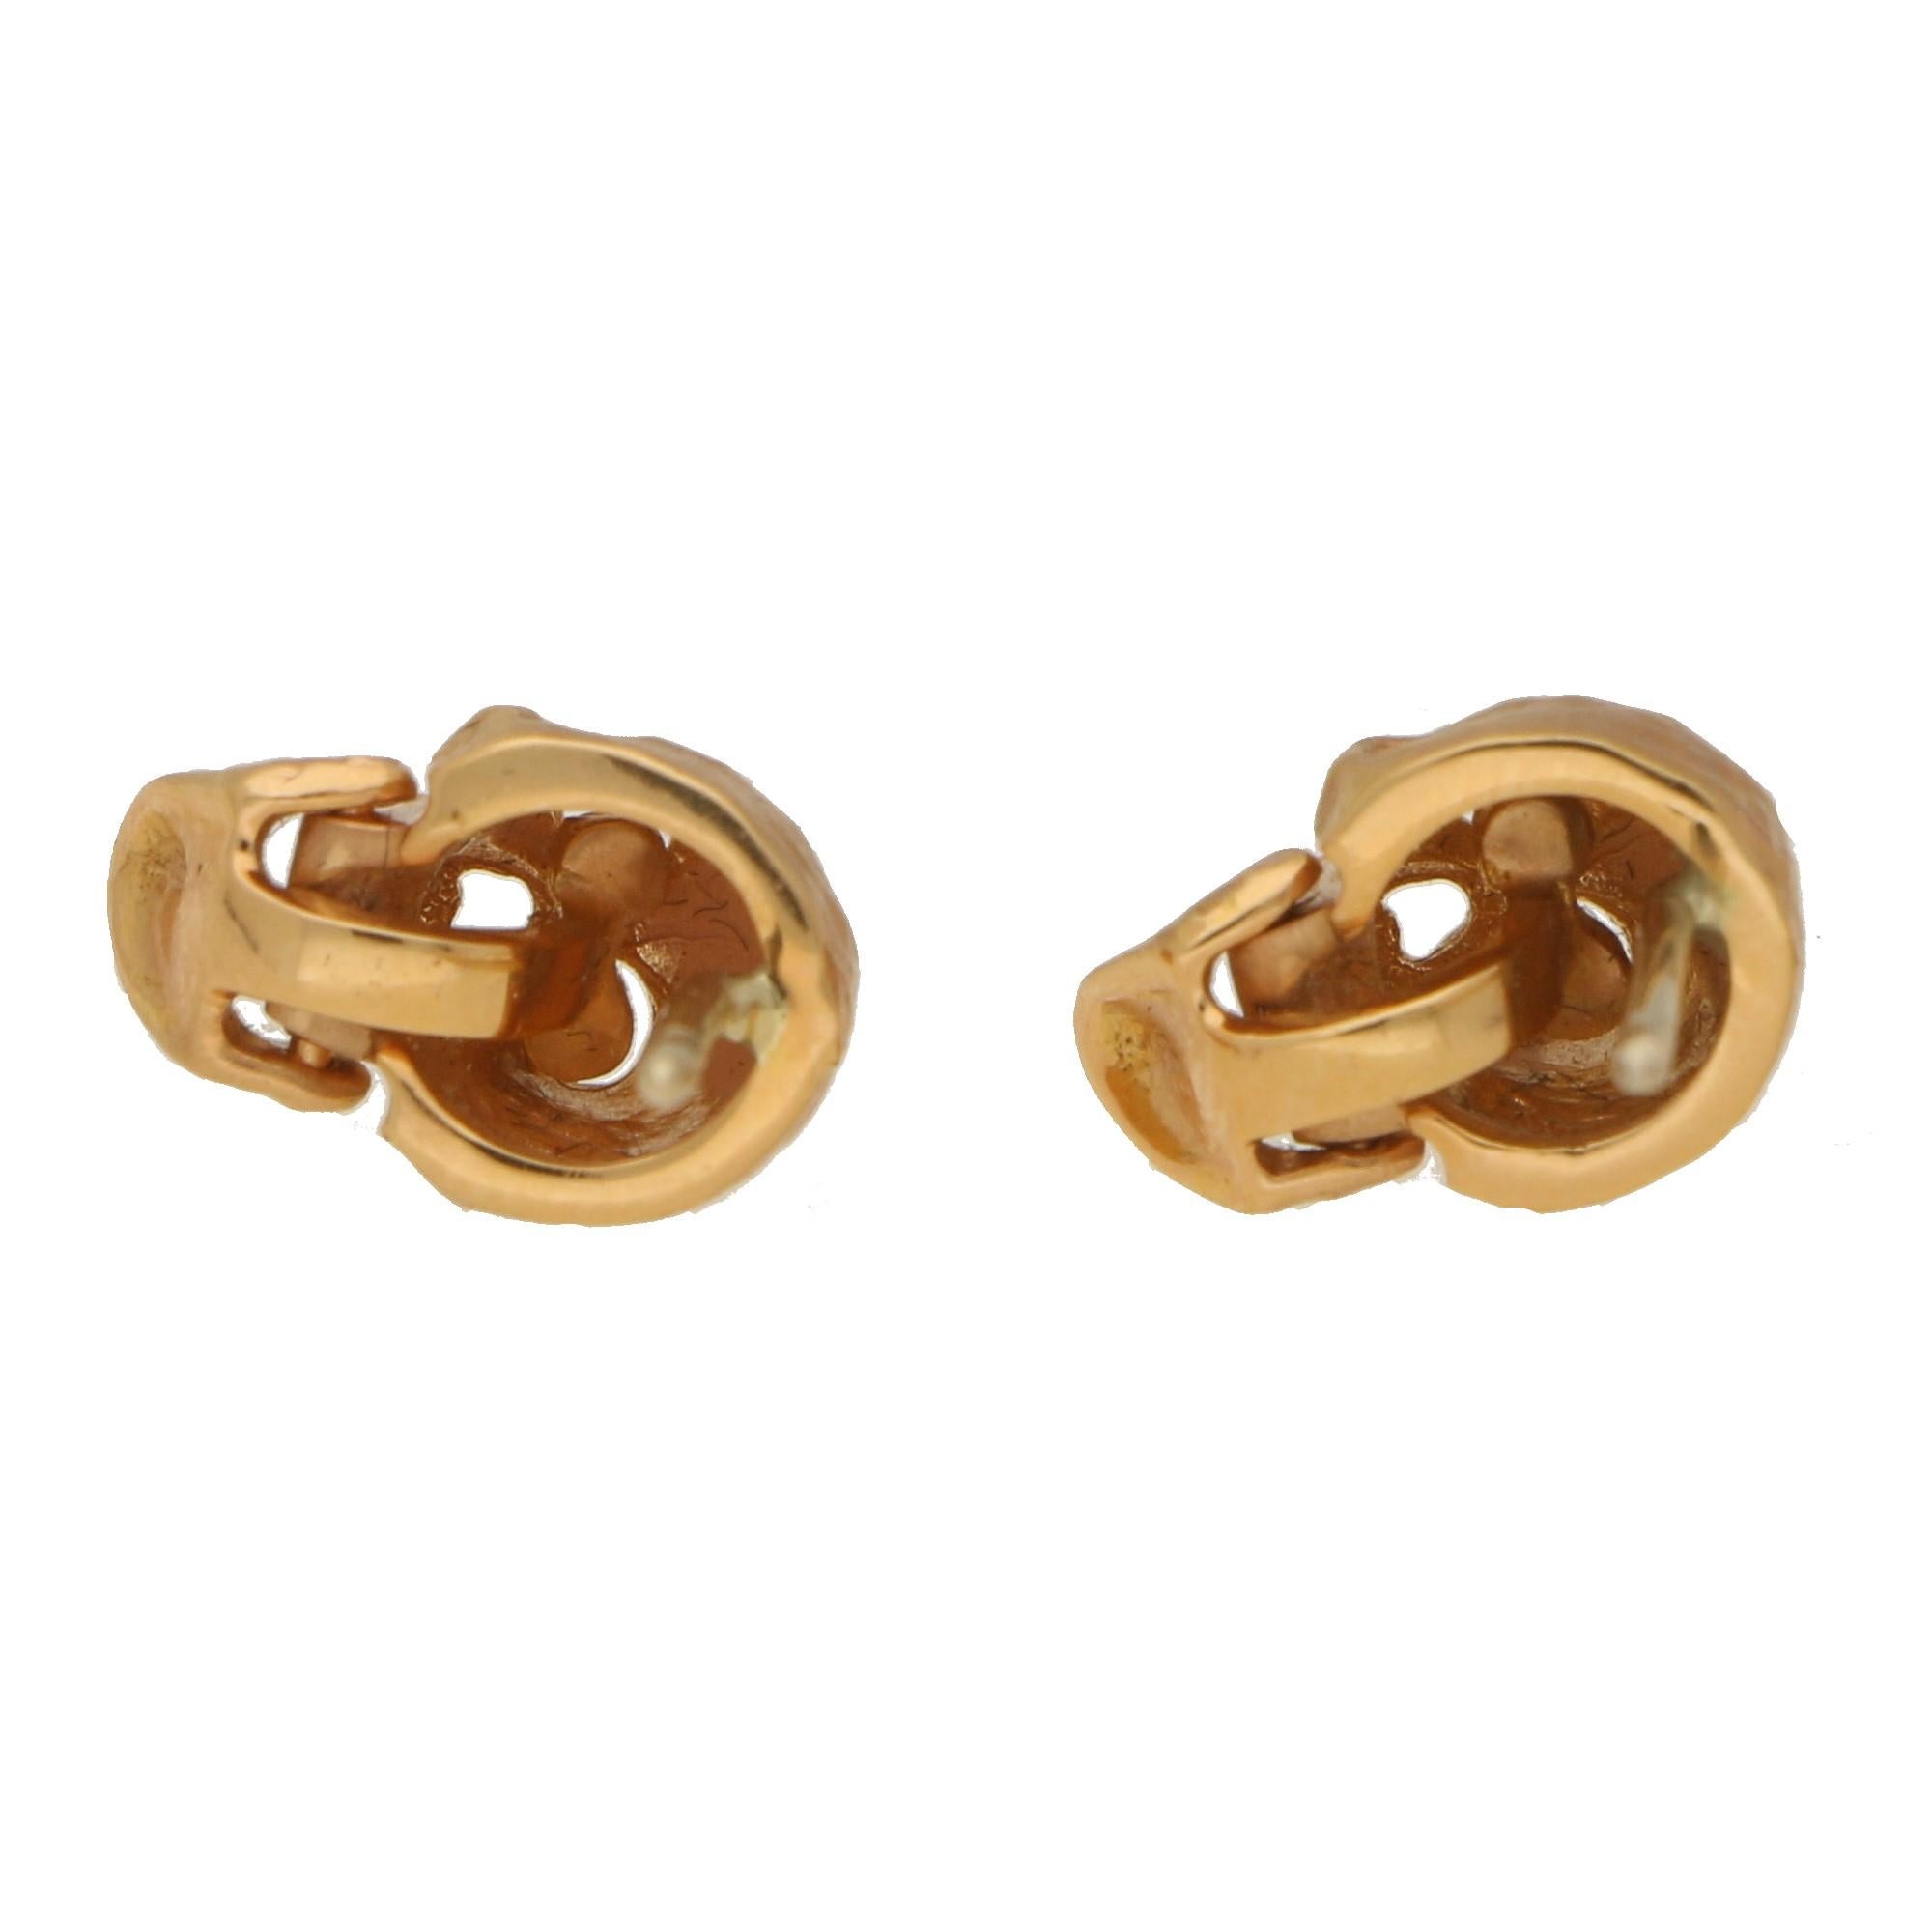 Modern 18 Carat Rose Gold Skull Stud Earrings with Diamond Set Eyes